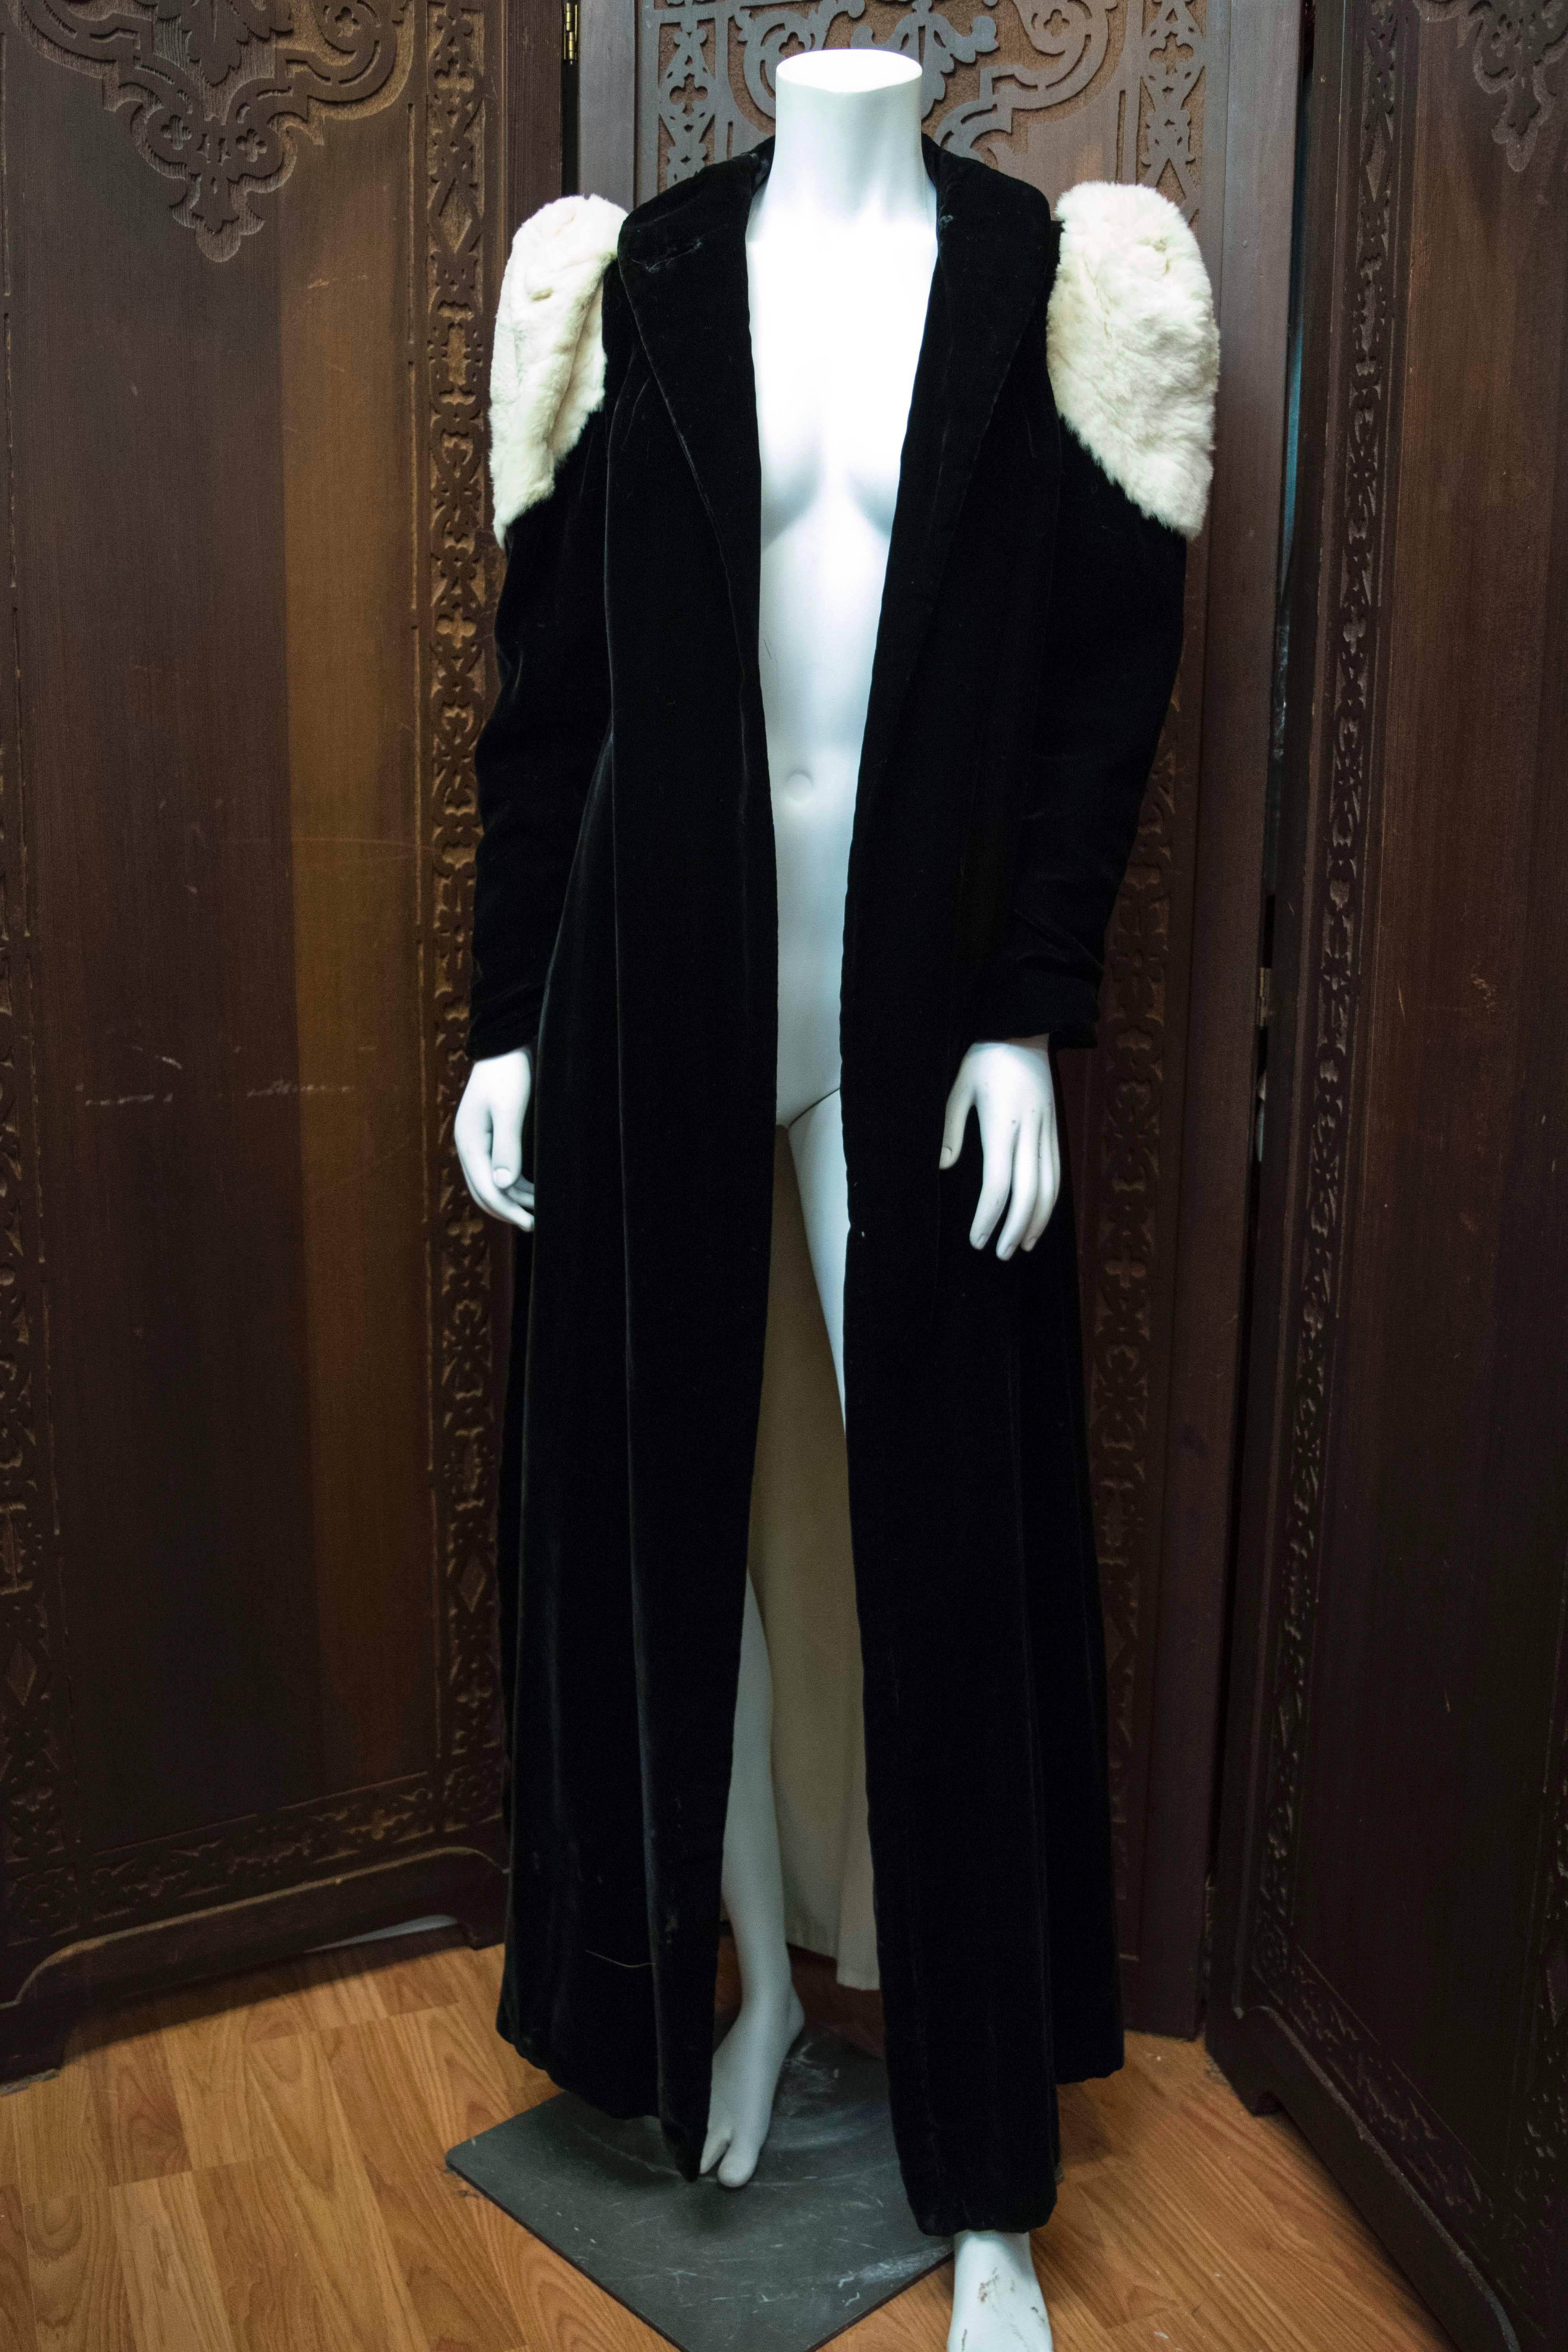 1930s Black Velvet and Ermin Opera Coat

B 30
W 28
H 42
L 60